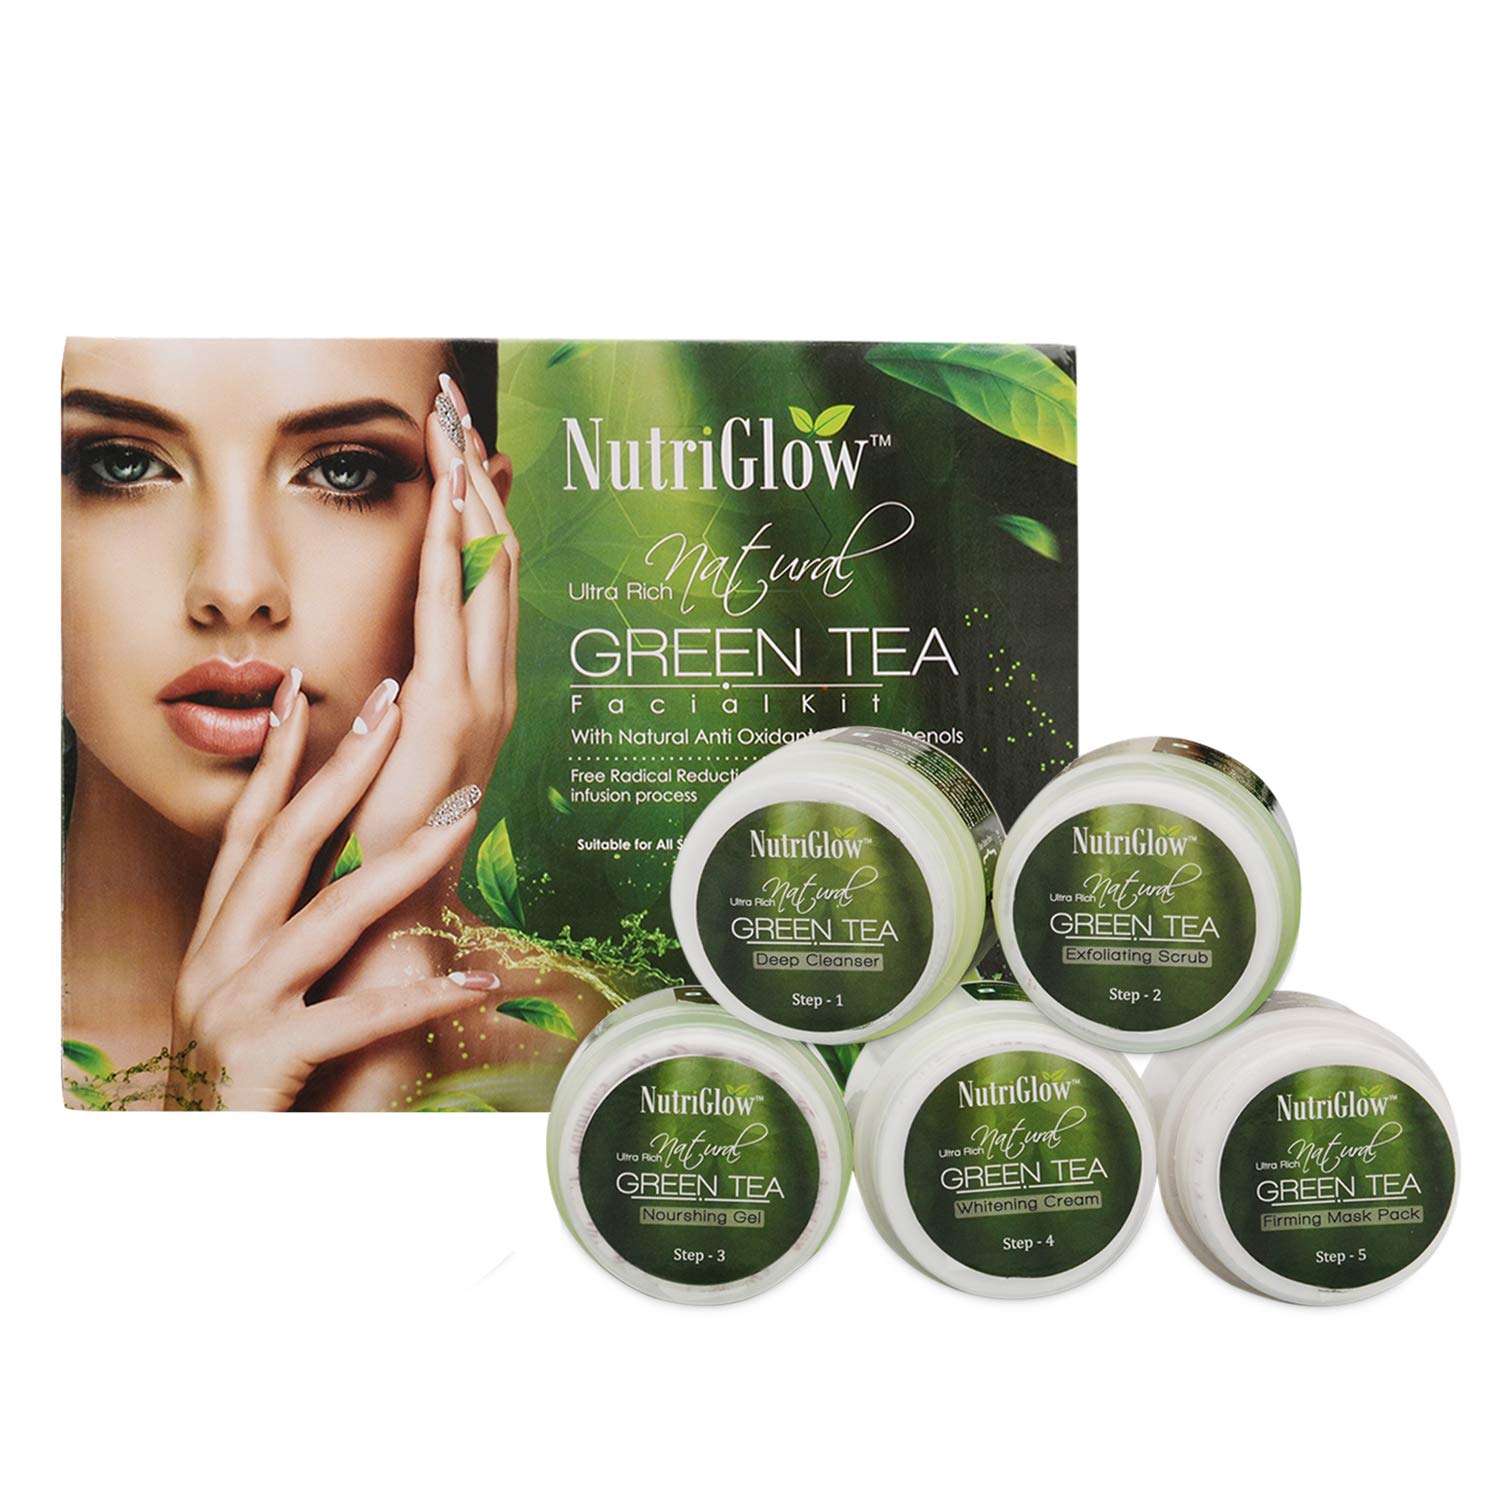 Buy NutriGlow Green Tea Facial Kit